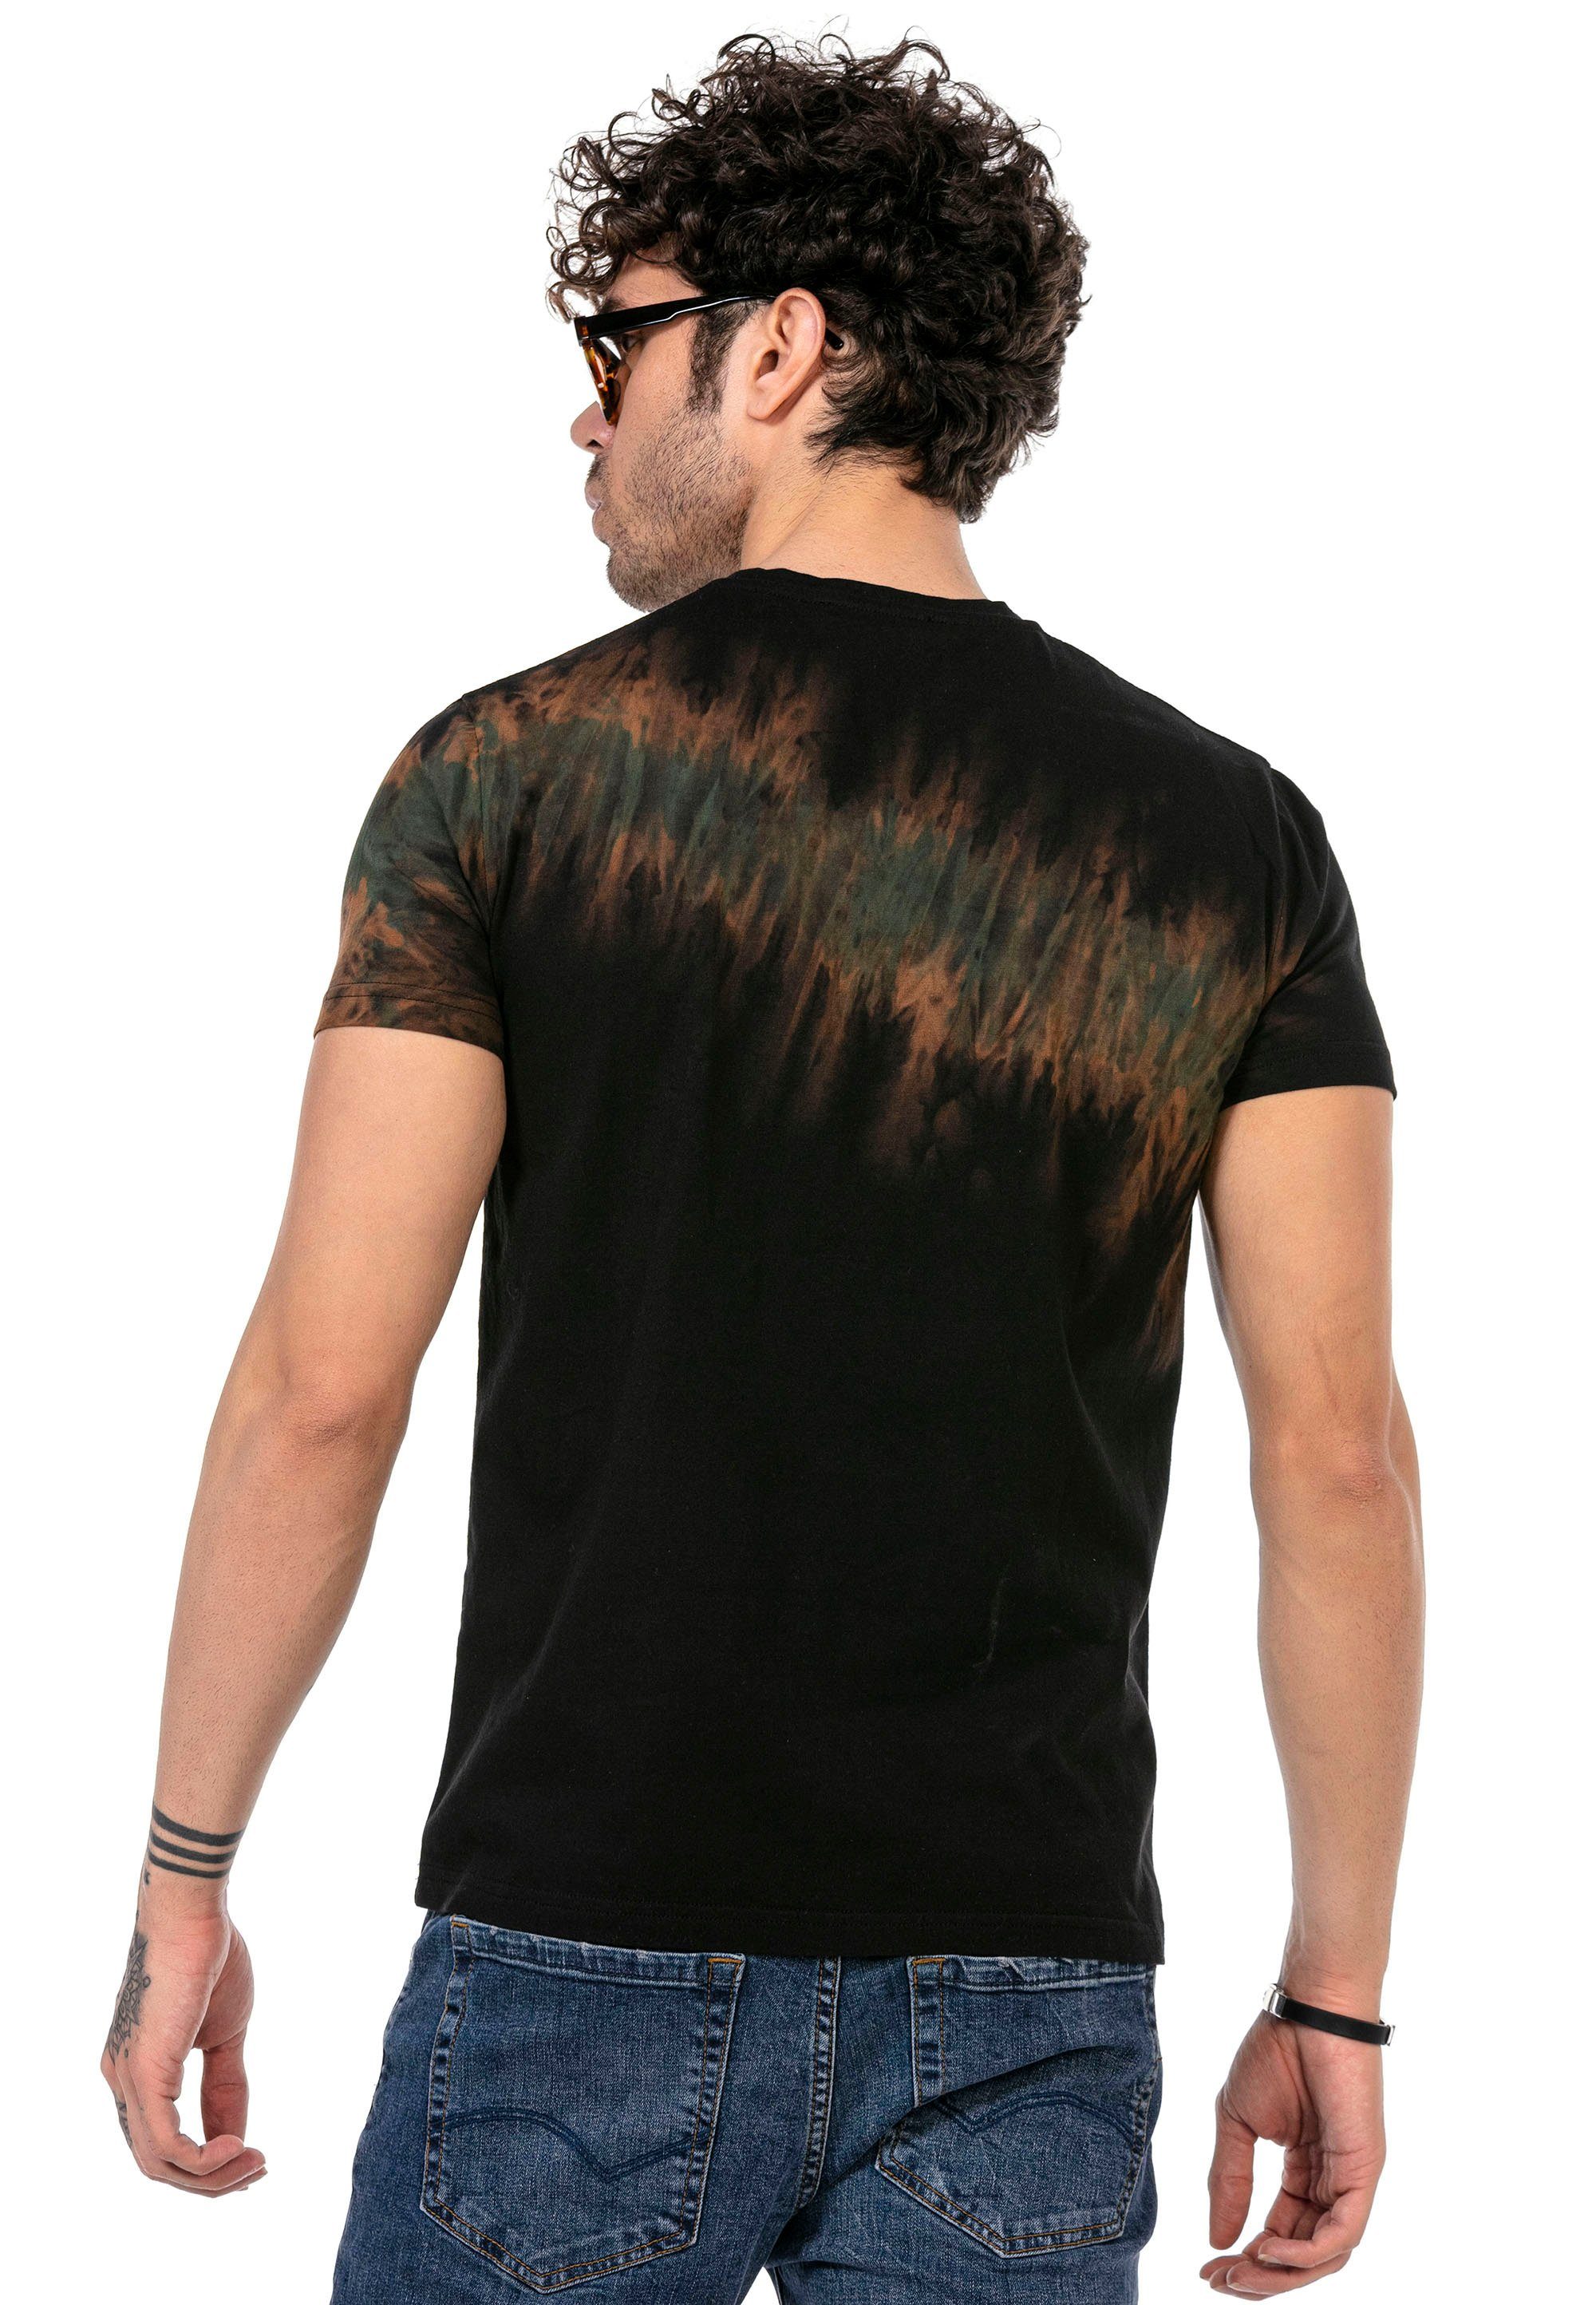 RedBridge T-Shirt Surprise trendigem in Batik-Design schwarz